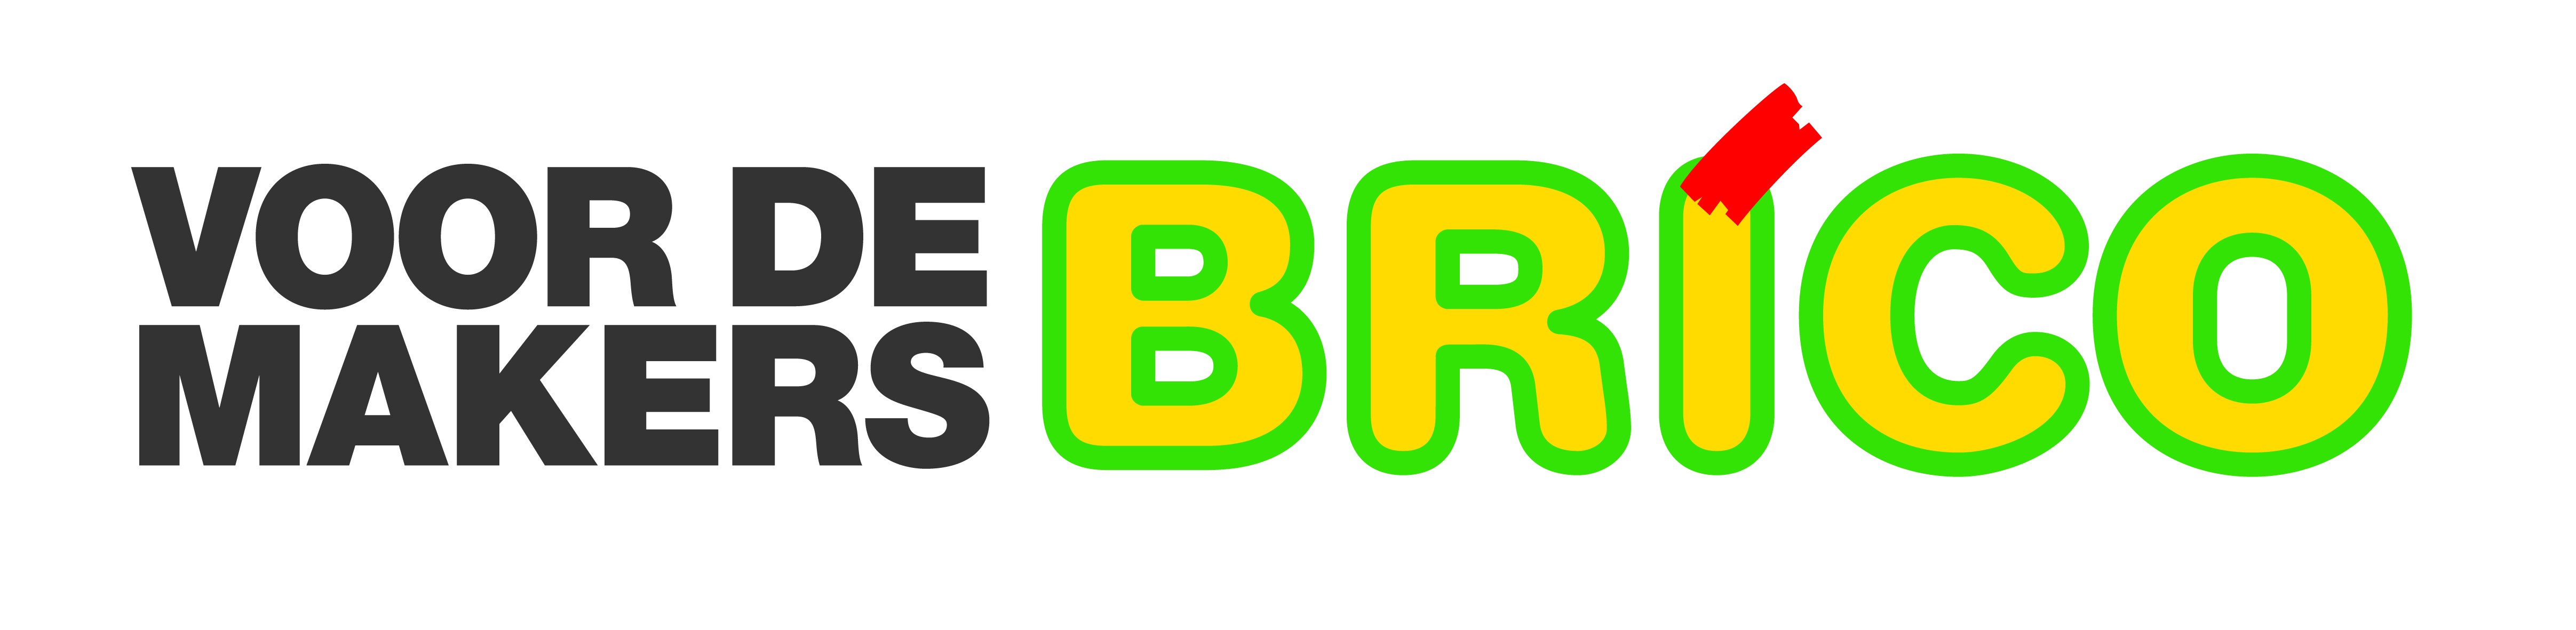 Brico logo CMYK payoff 1 NL